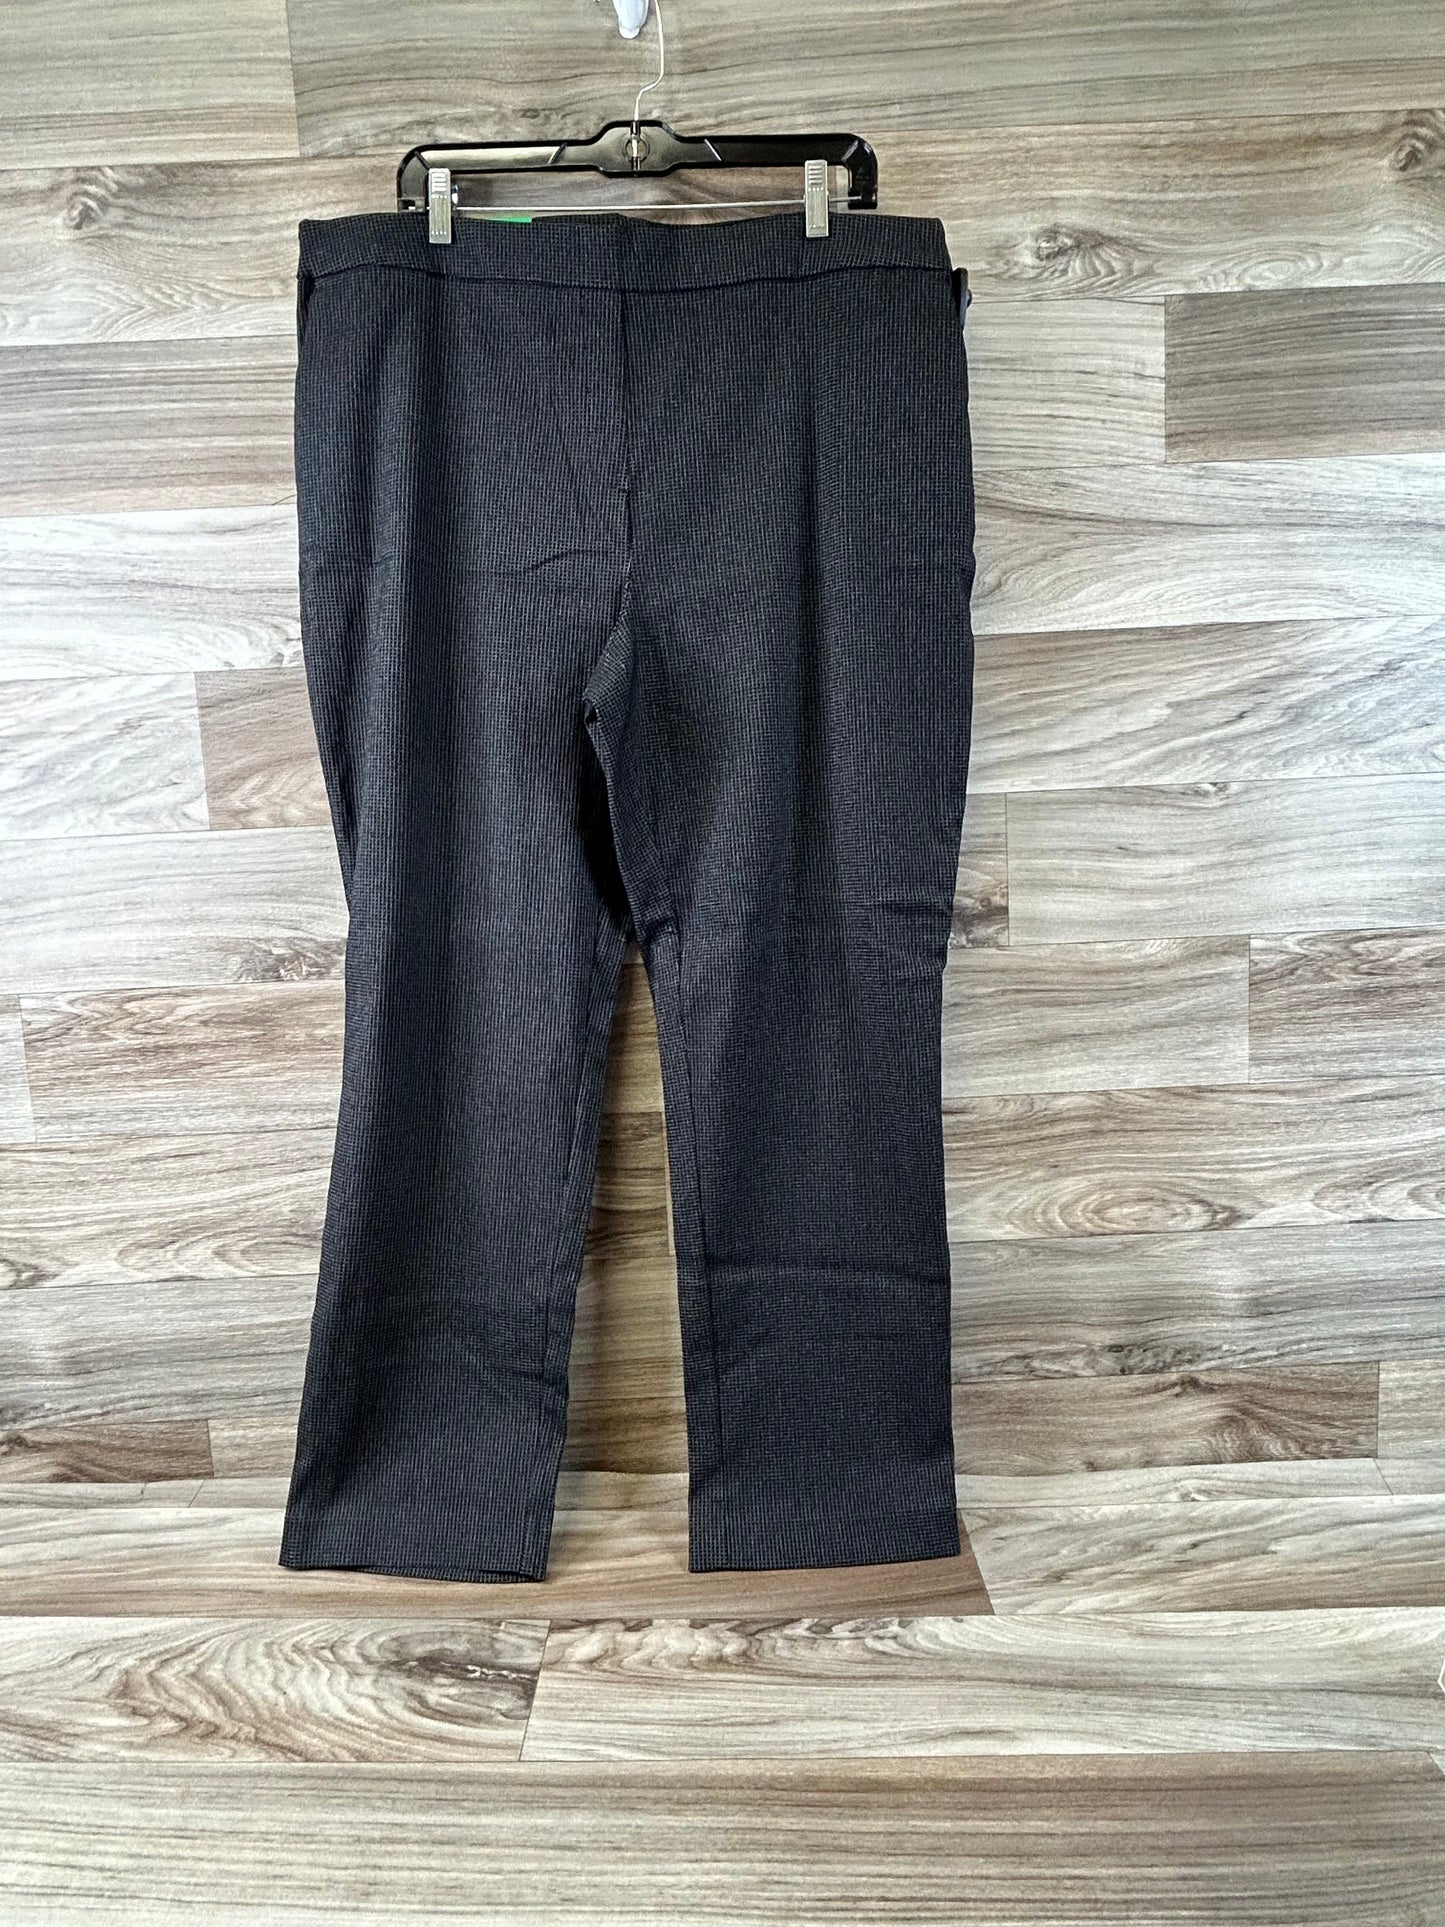 Black Pants Dress Hilary Radley, Size 14